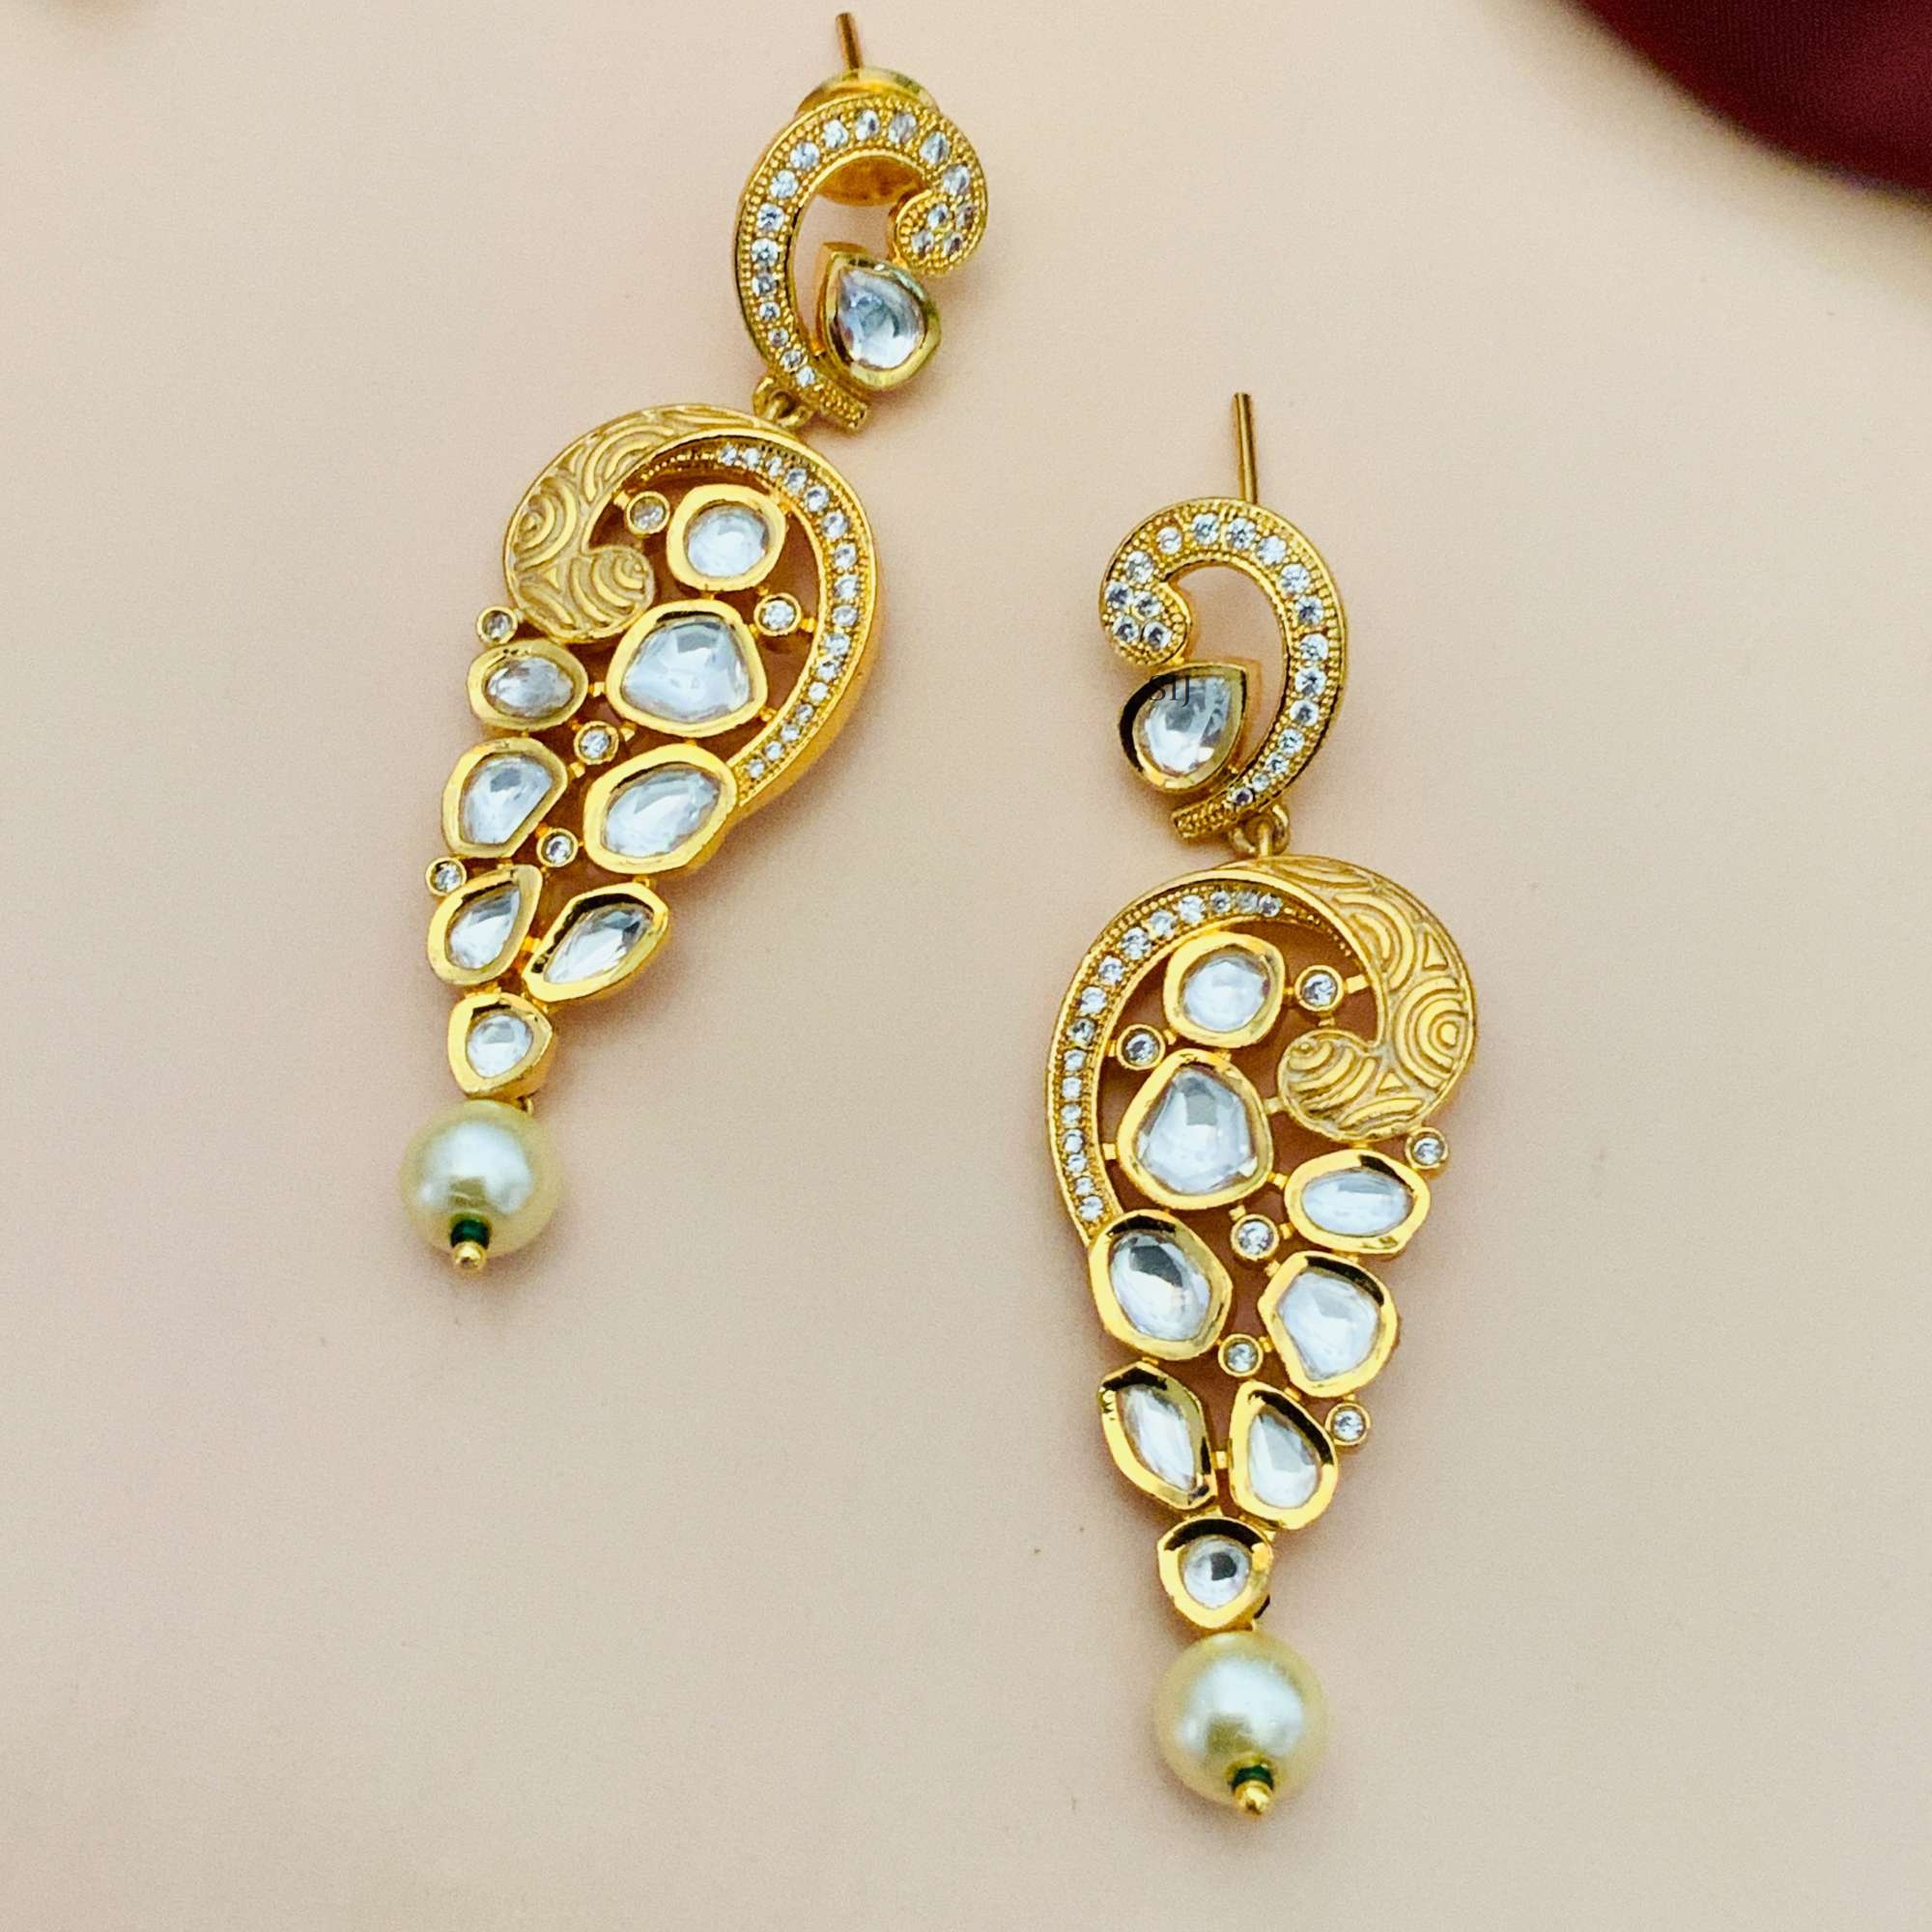 Artificial Stones and Kundan Peacock Design Earrings